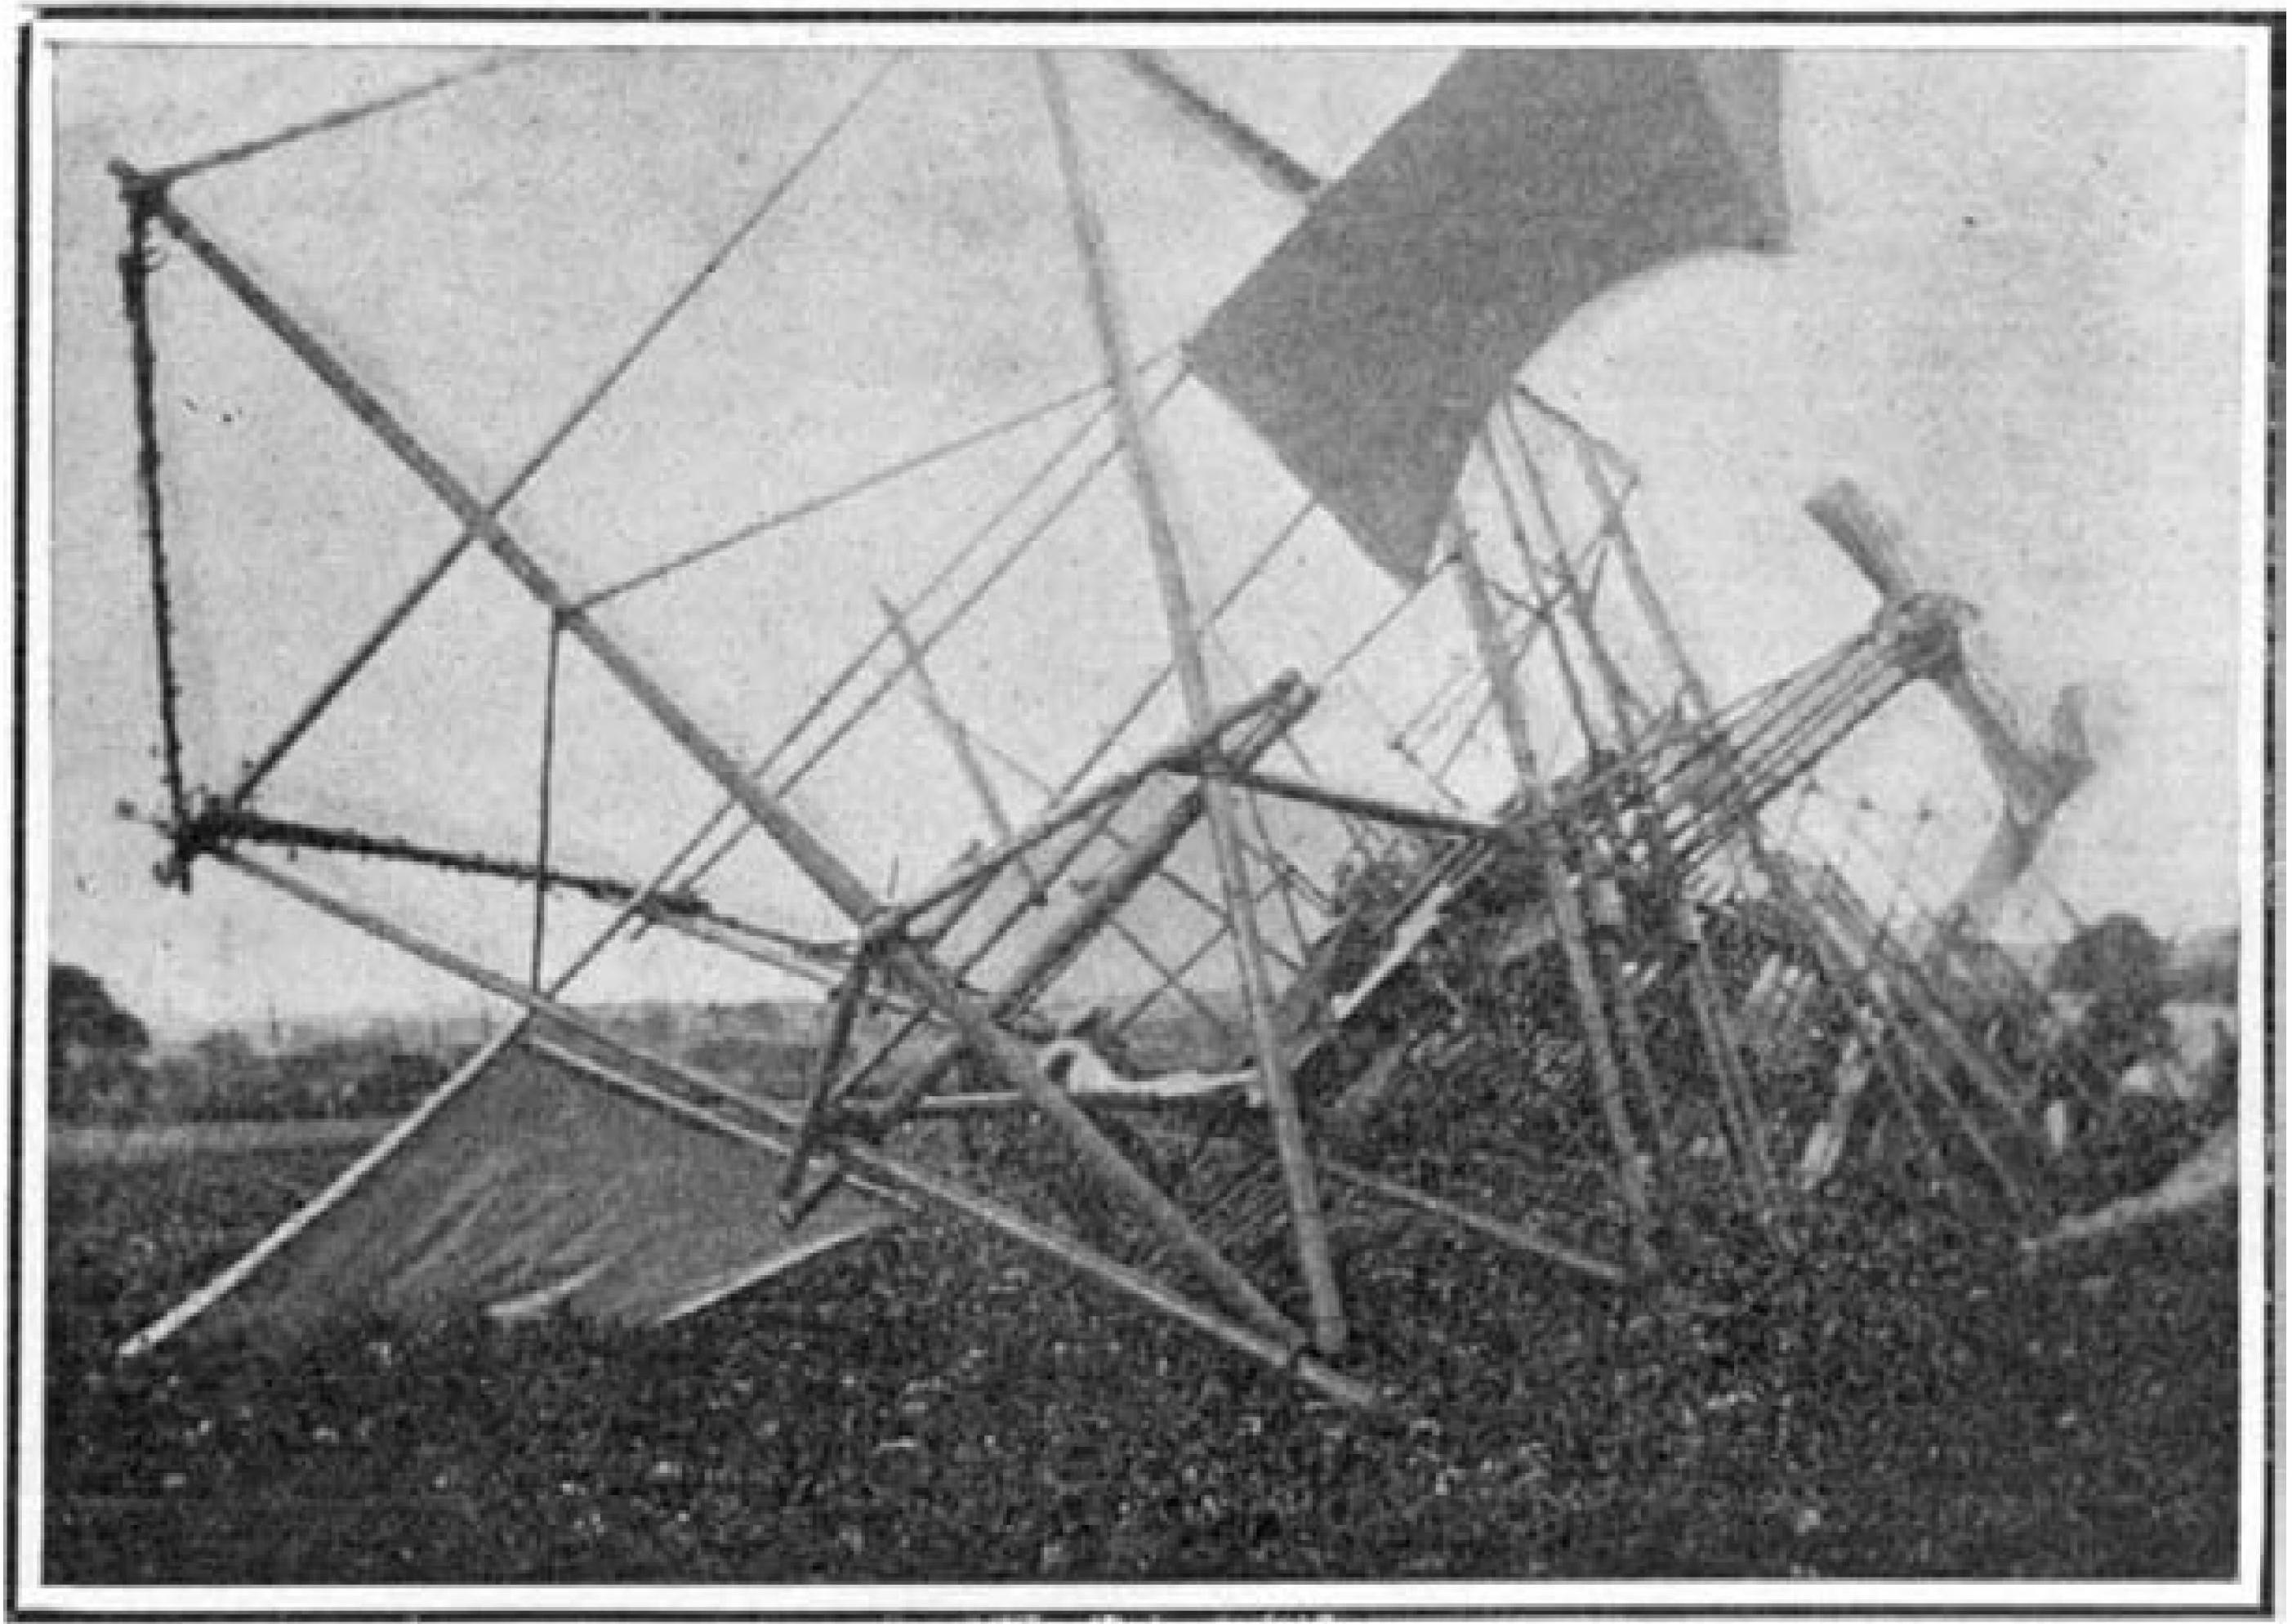 Barton's wrecked Airship